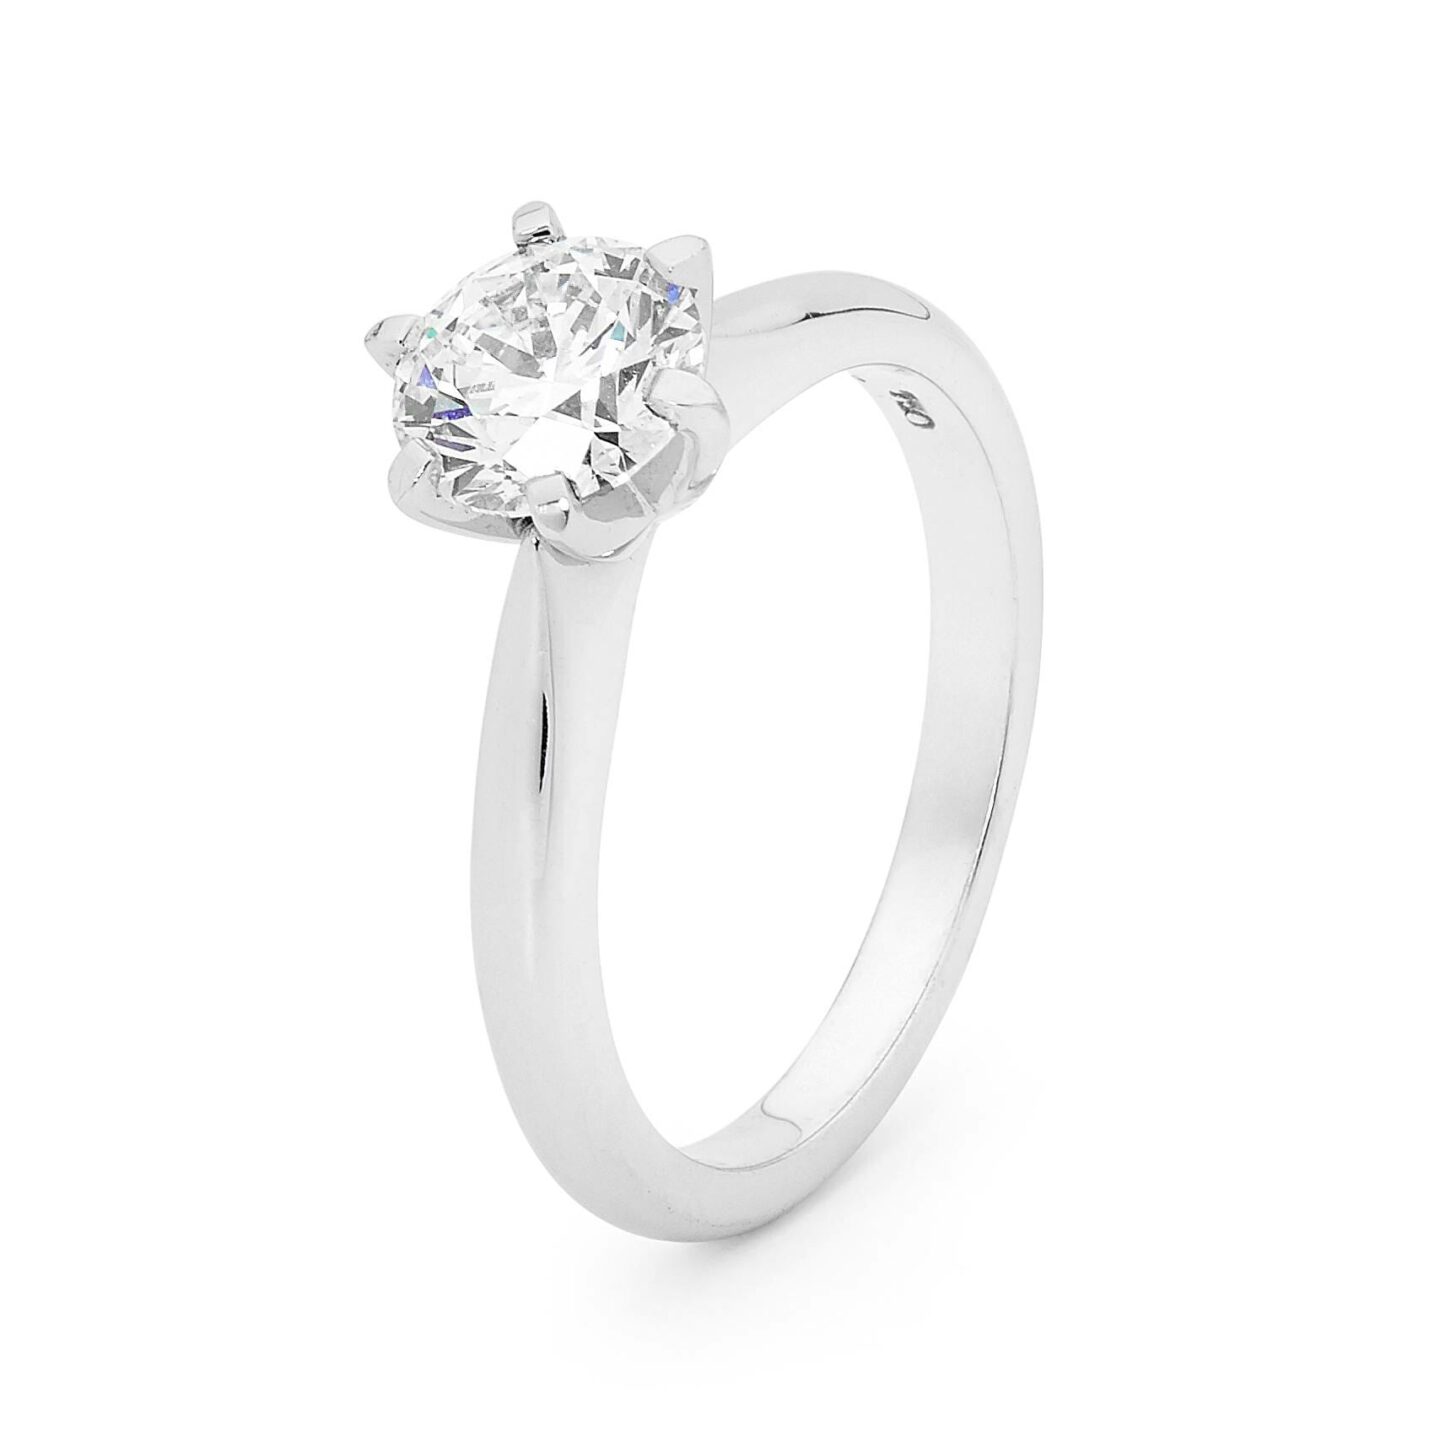 Janna – Round Brilliant Solitaire Diamond Engagement Ring